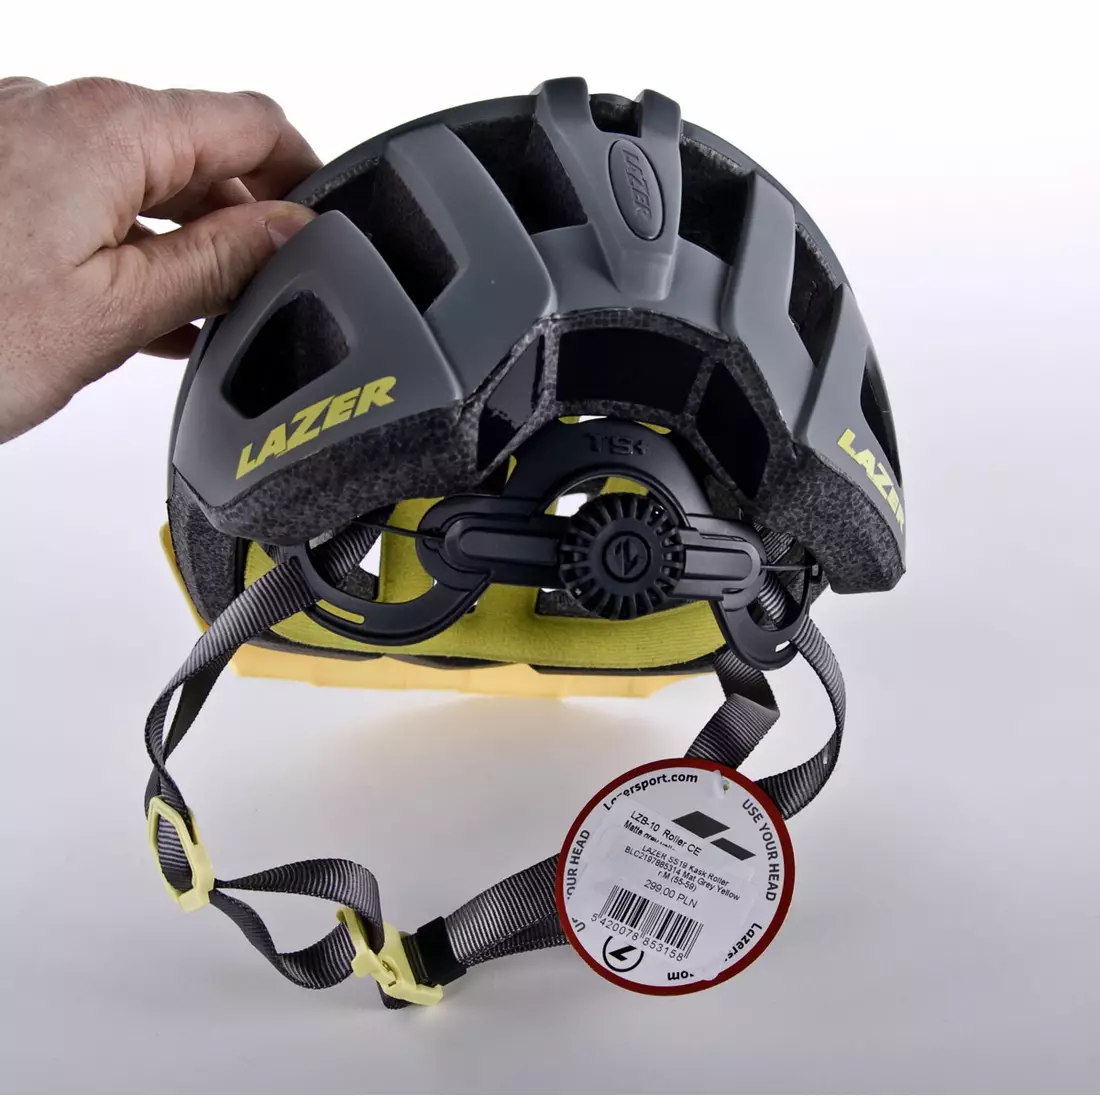 MTB cyklistická přilba LAZER ROLLER TS+ matná šedá žlutá